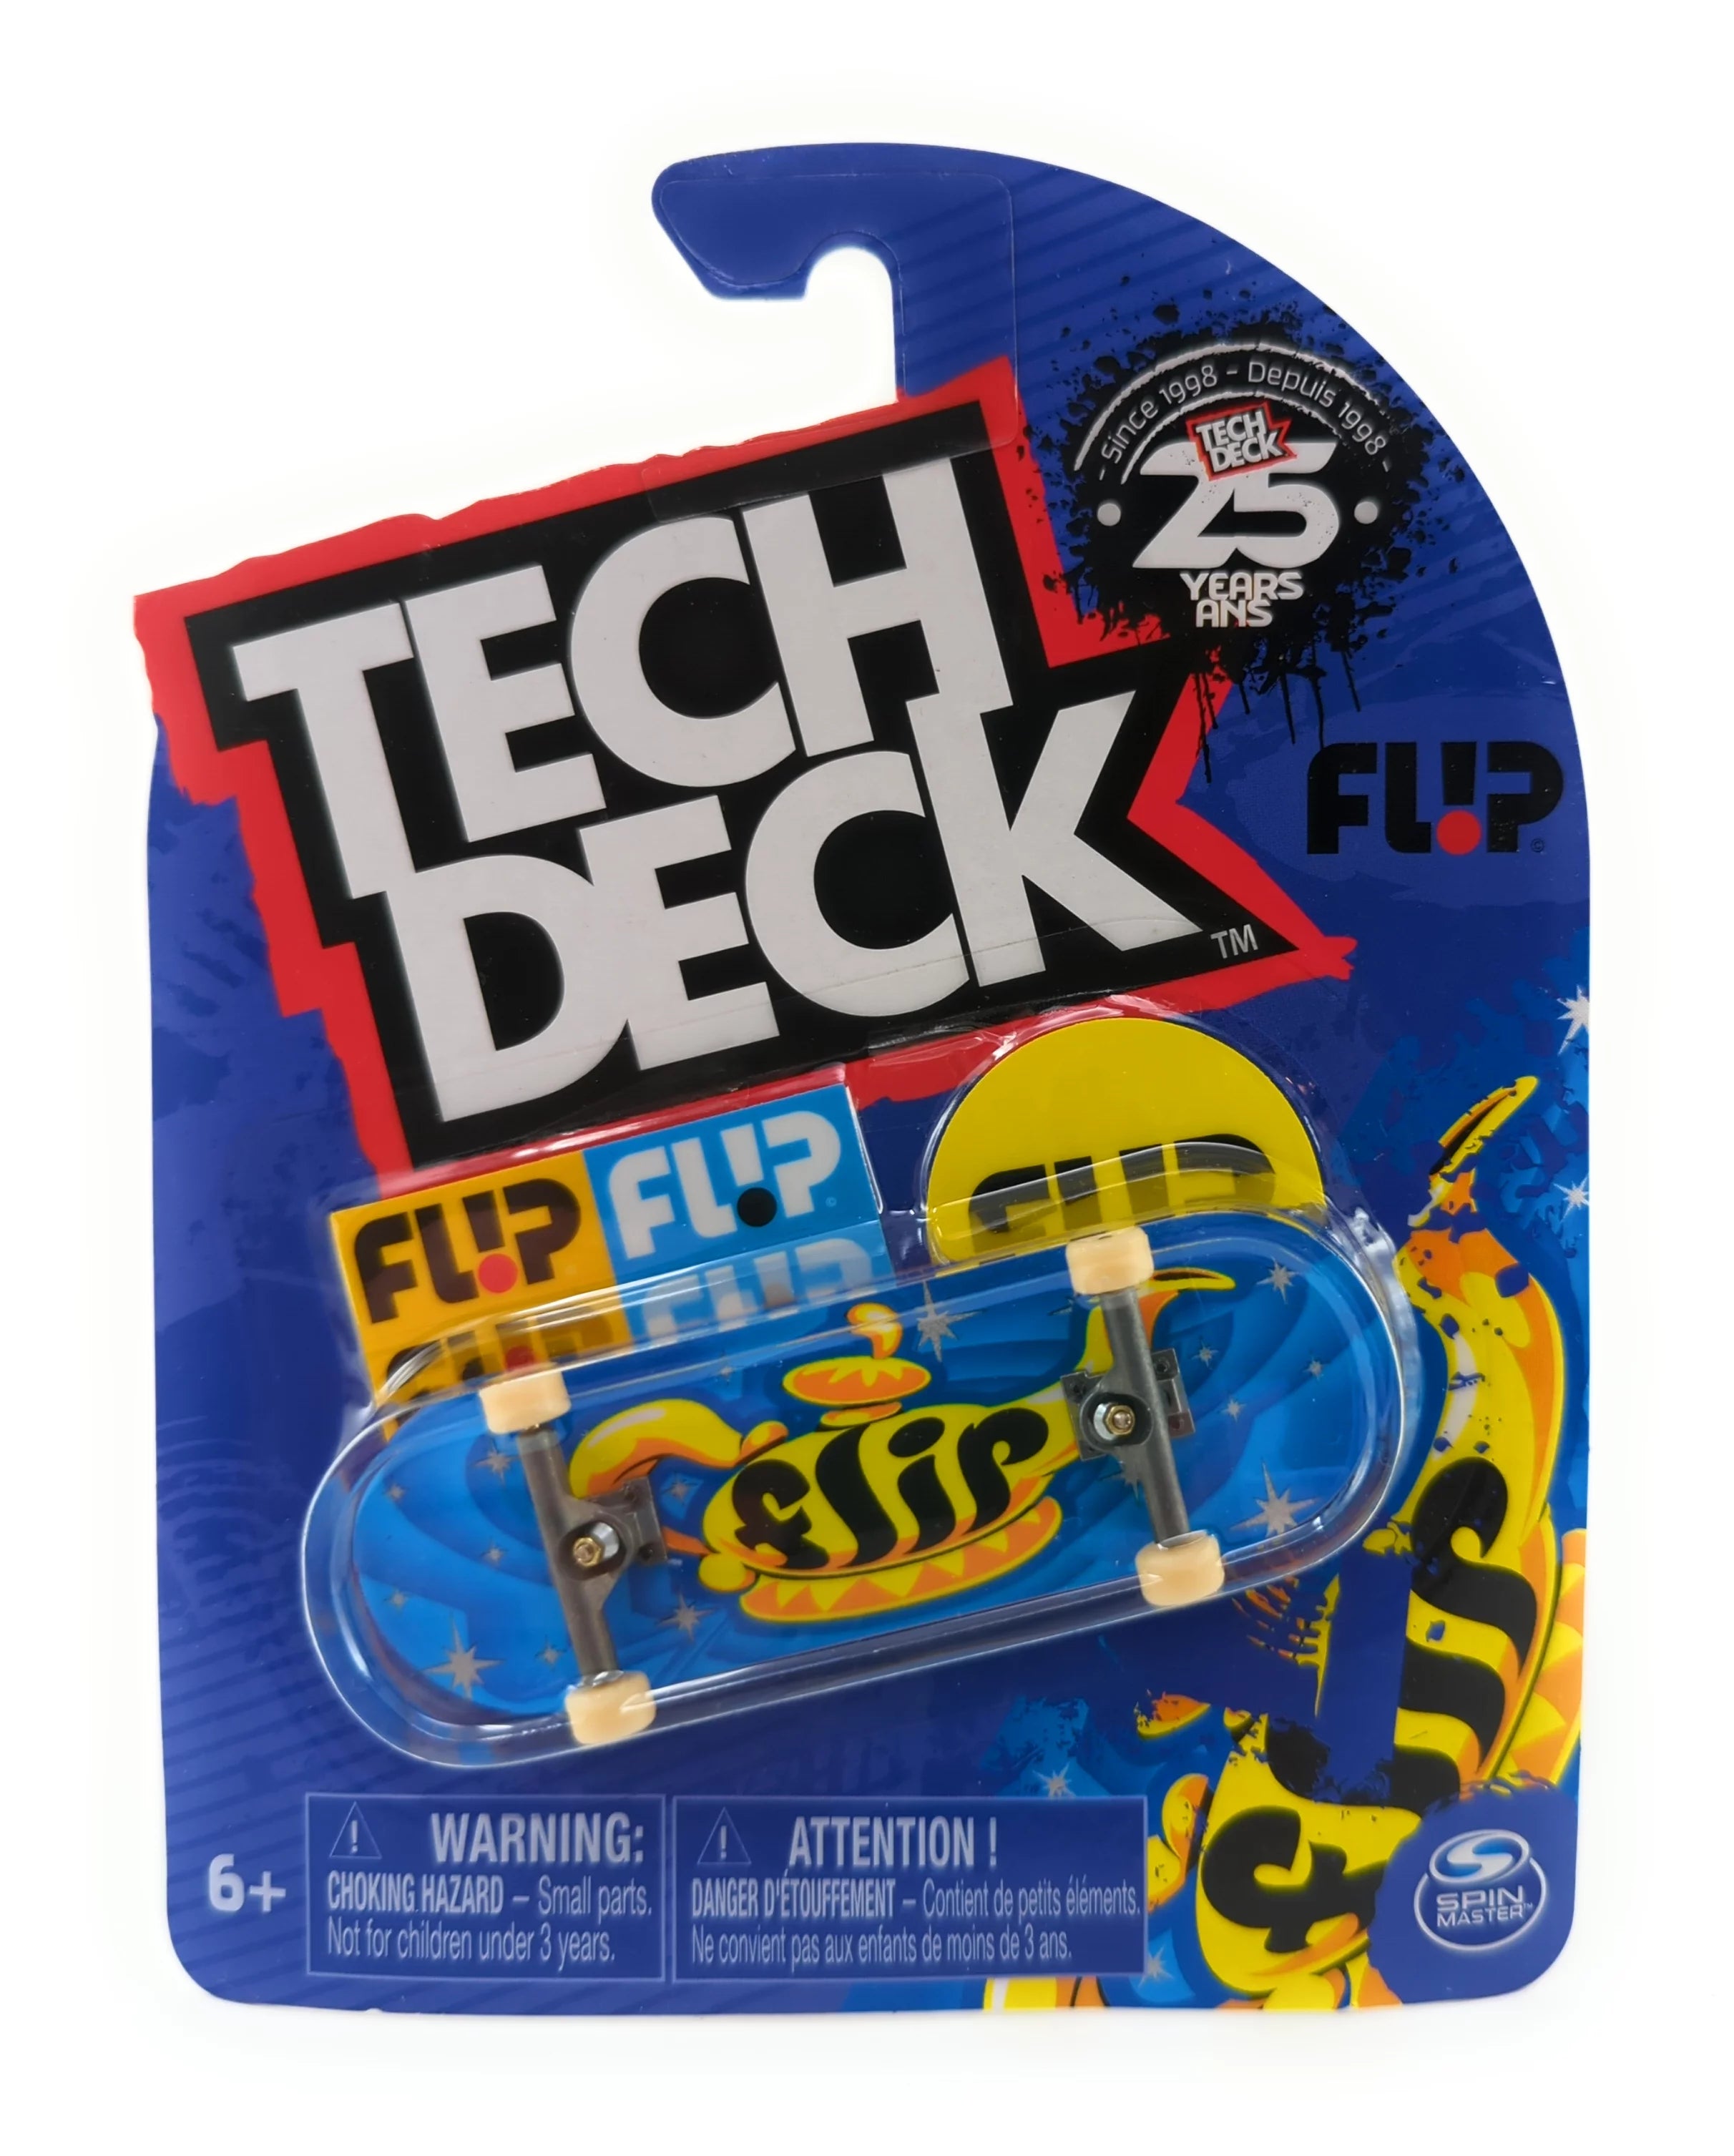 Tech Deck Singles